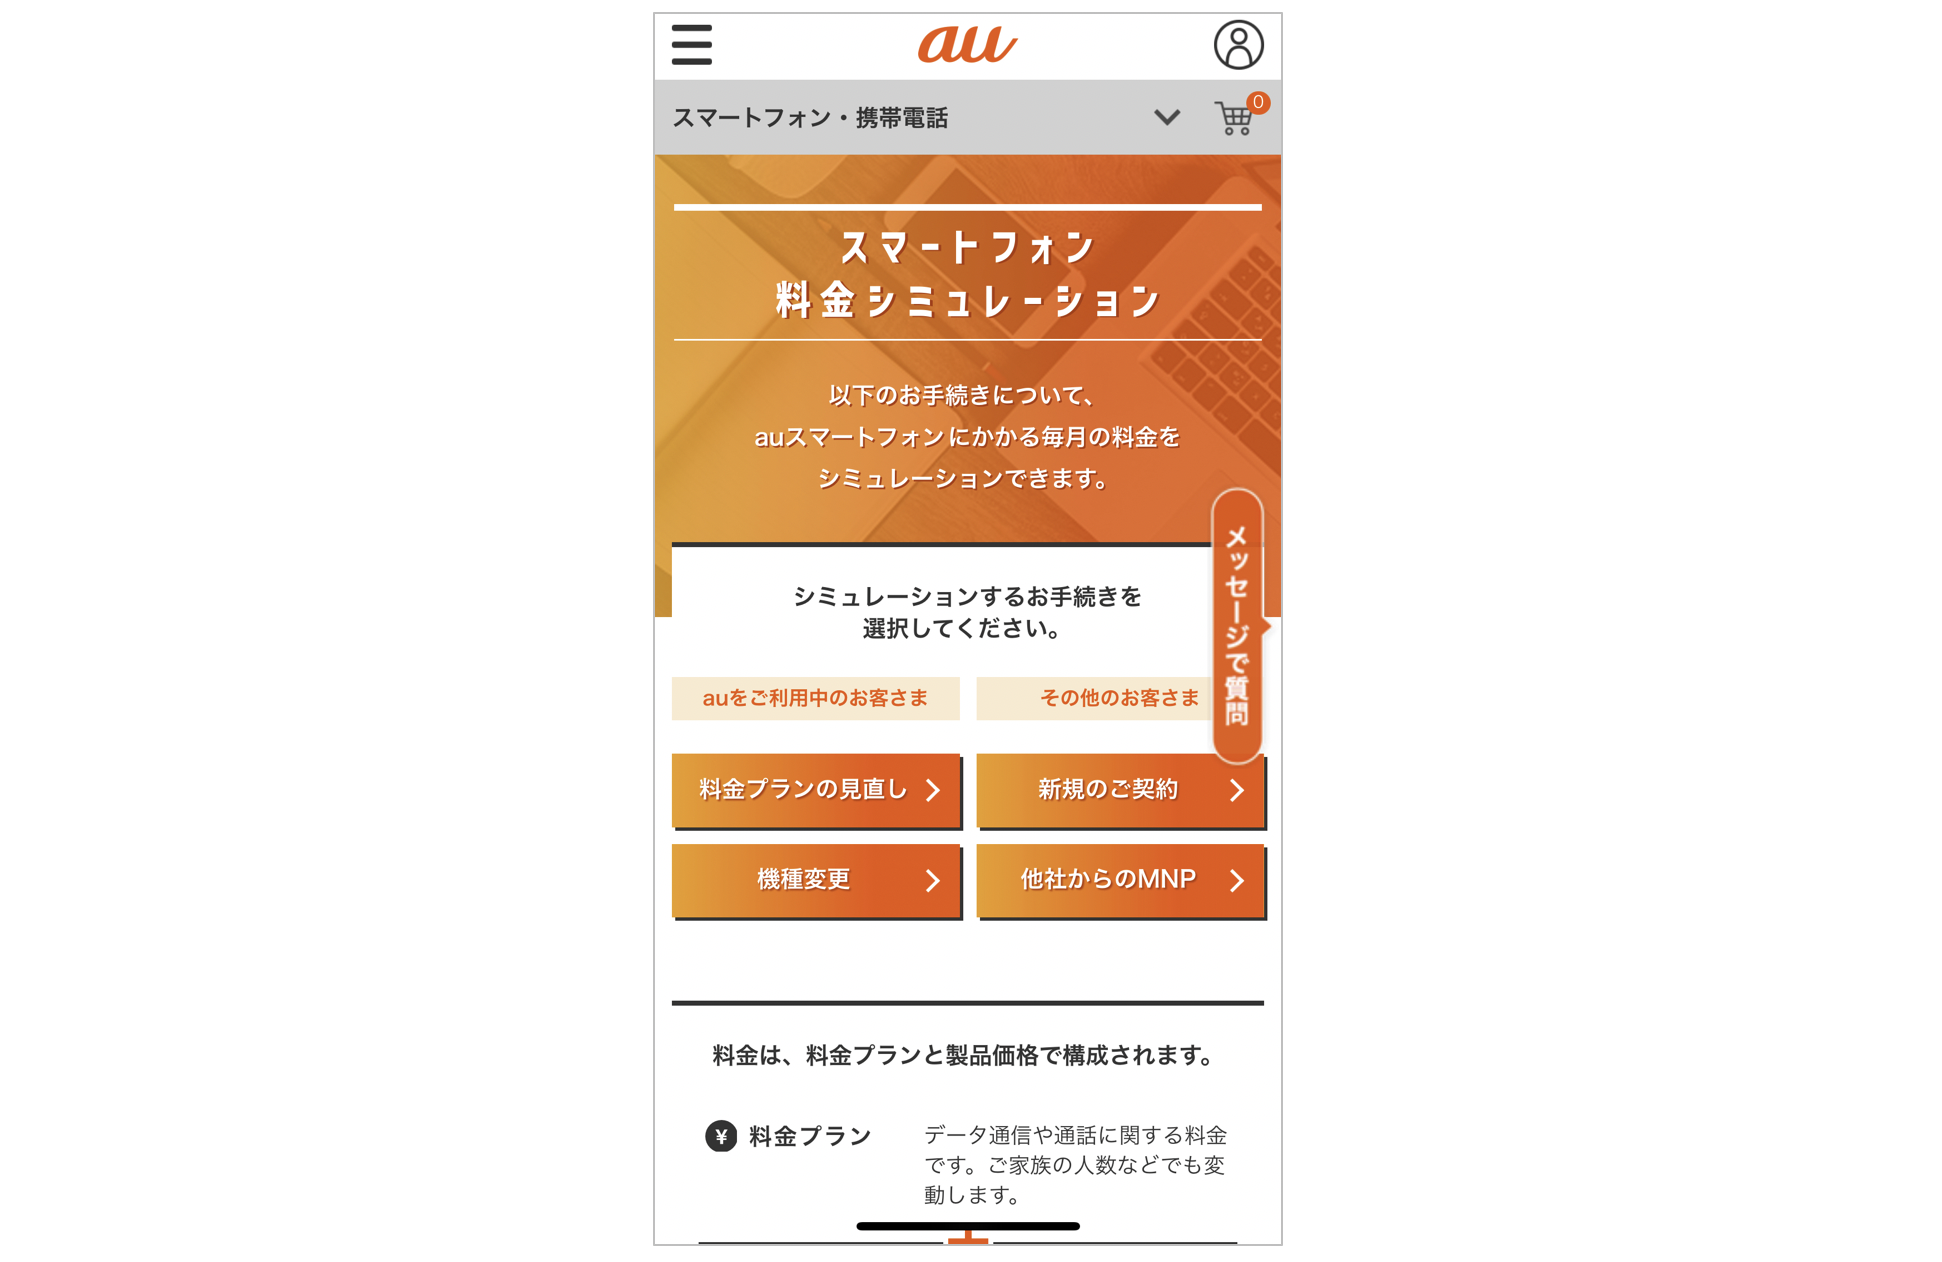 auのスマートフォン料金シミュレーションのTOP画面